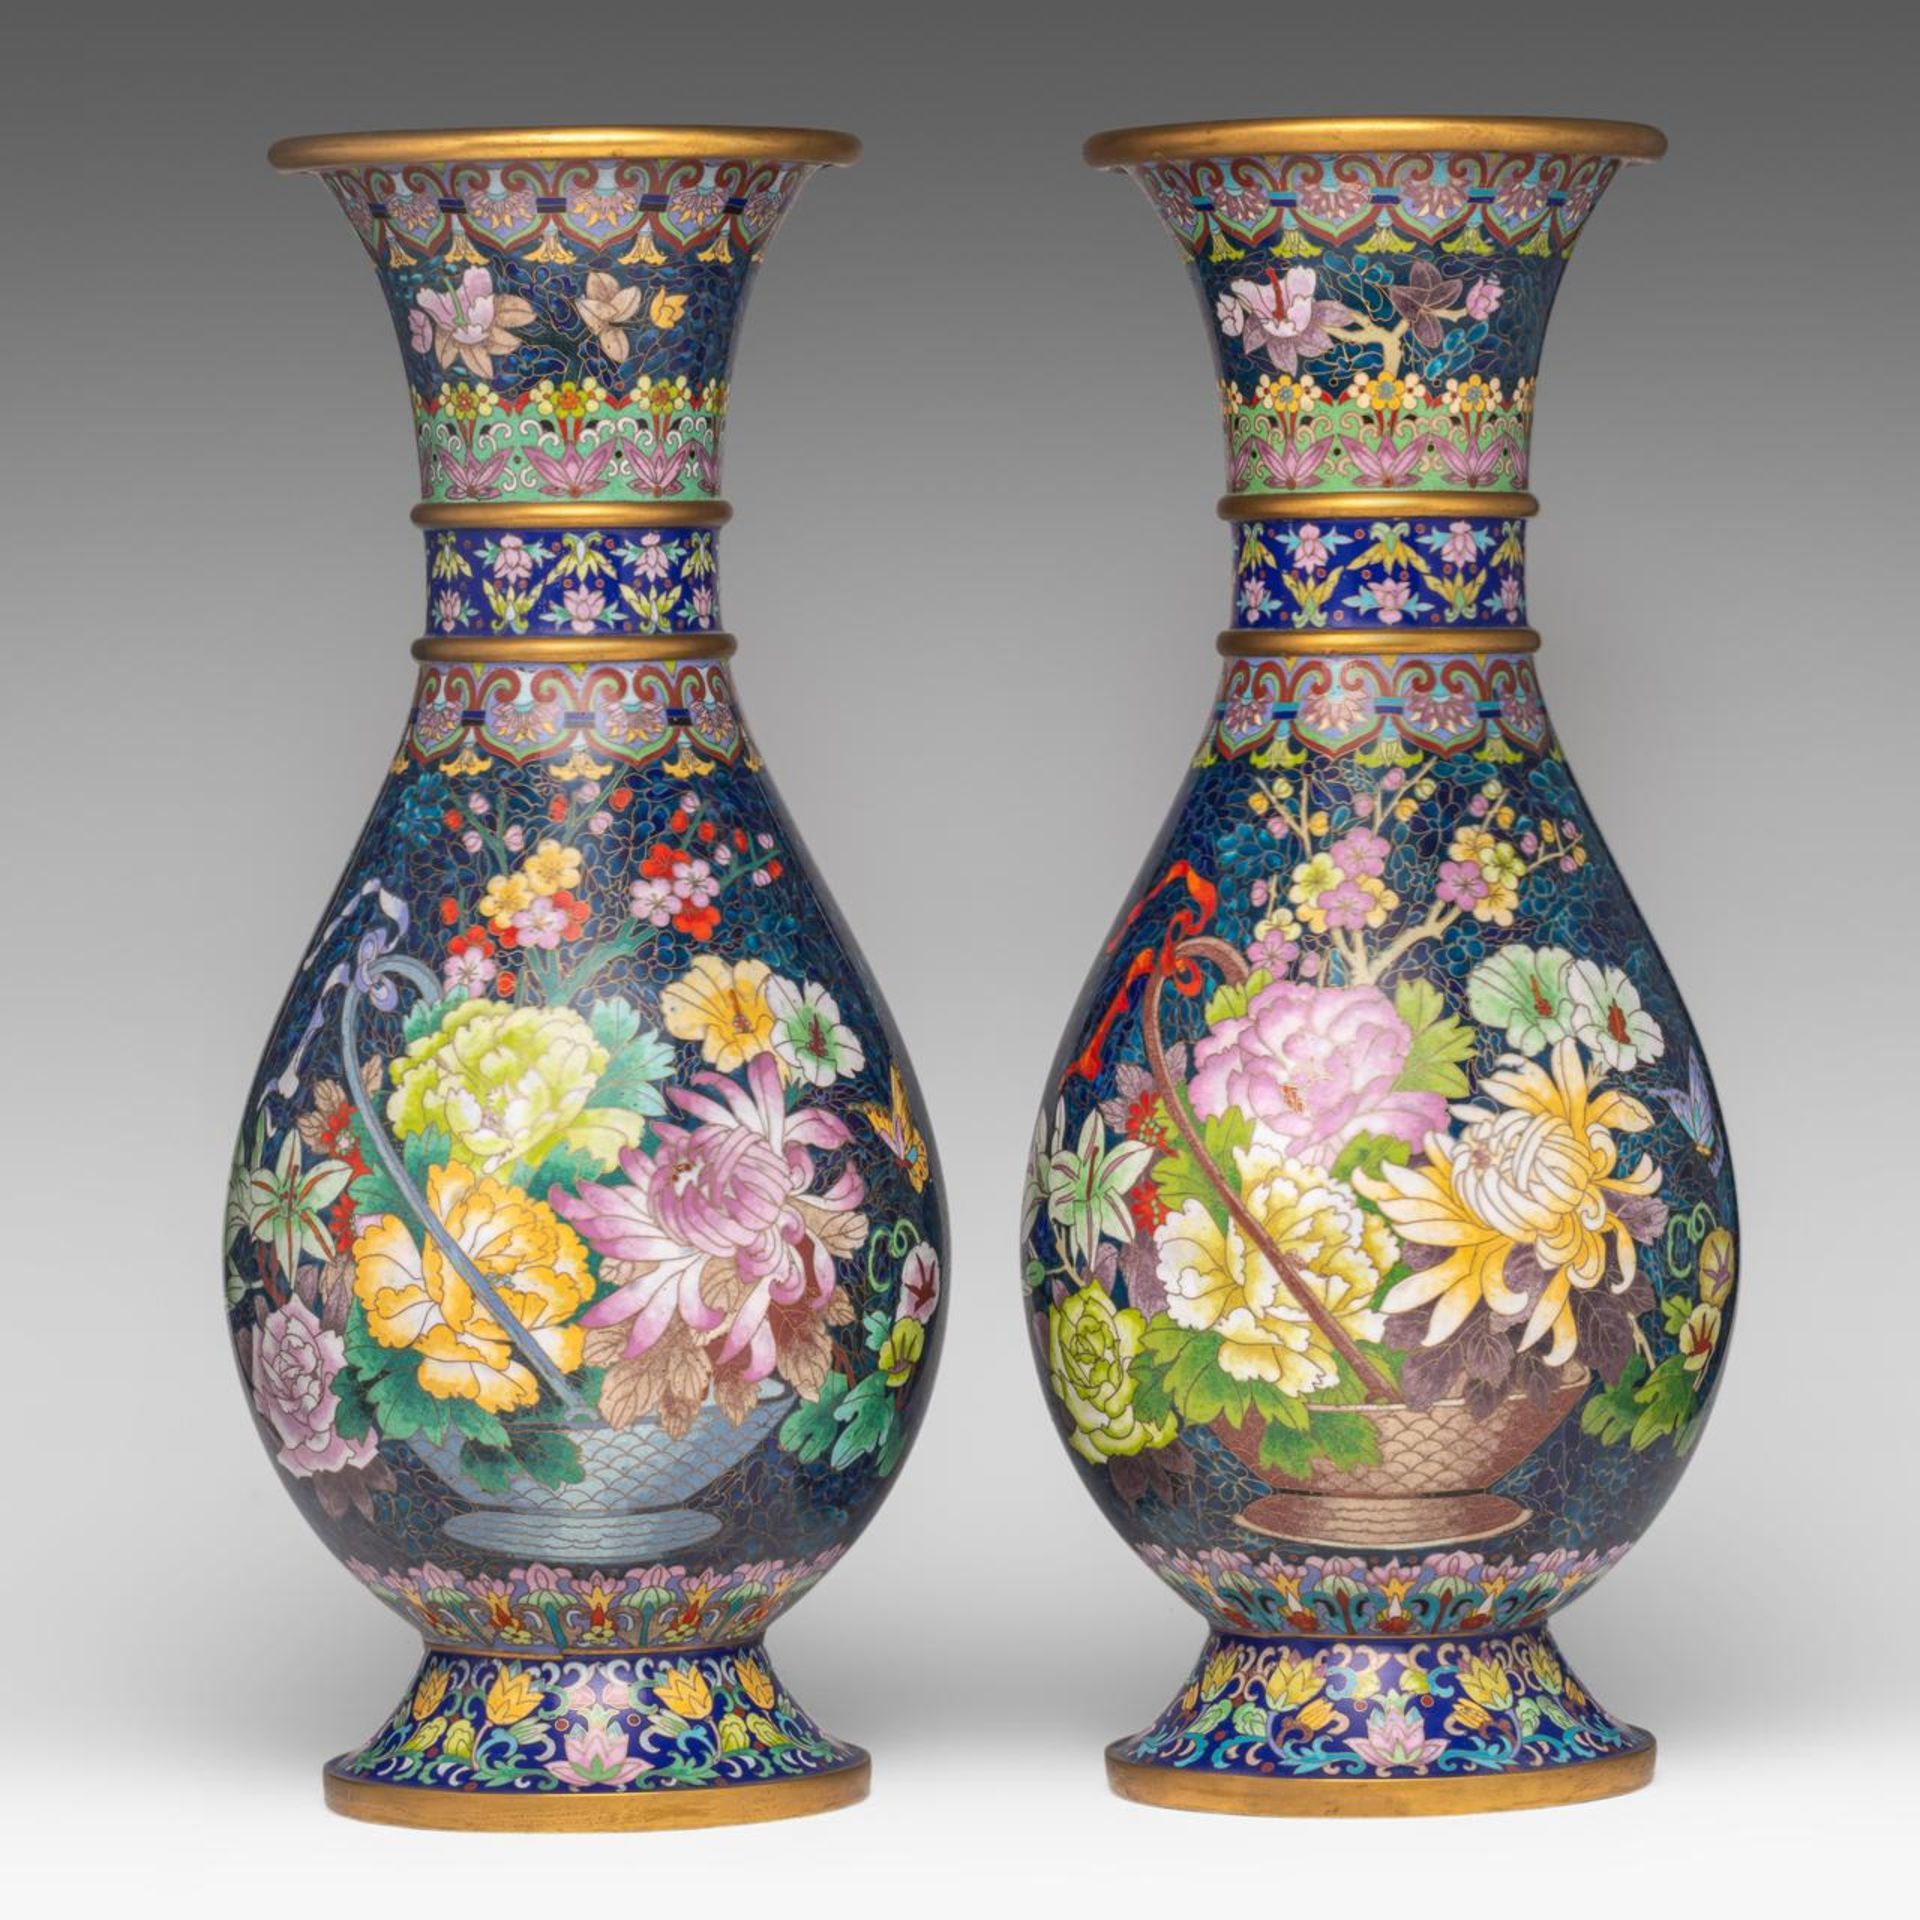 A pair of Chinese cloisonne enamelled 'Flower basket' vases, 20thC, H 52,5 cm